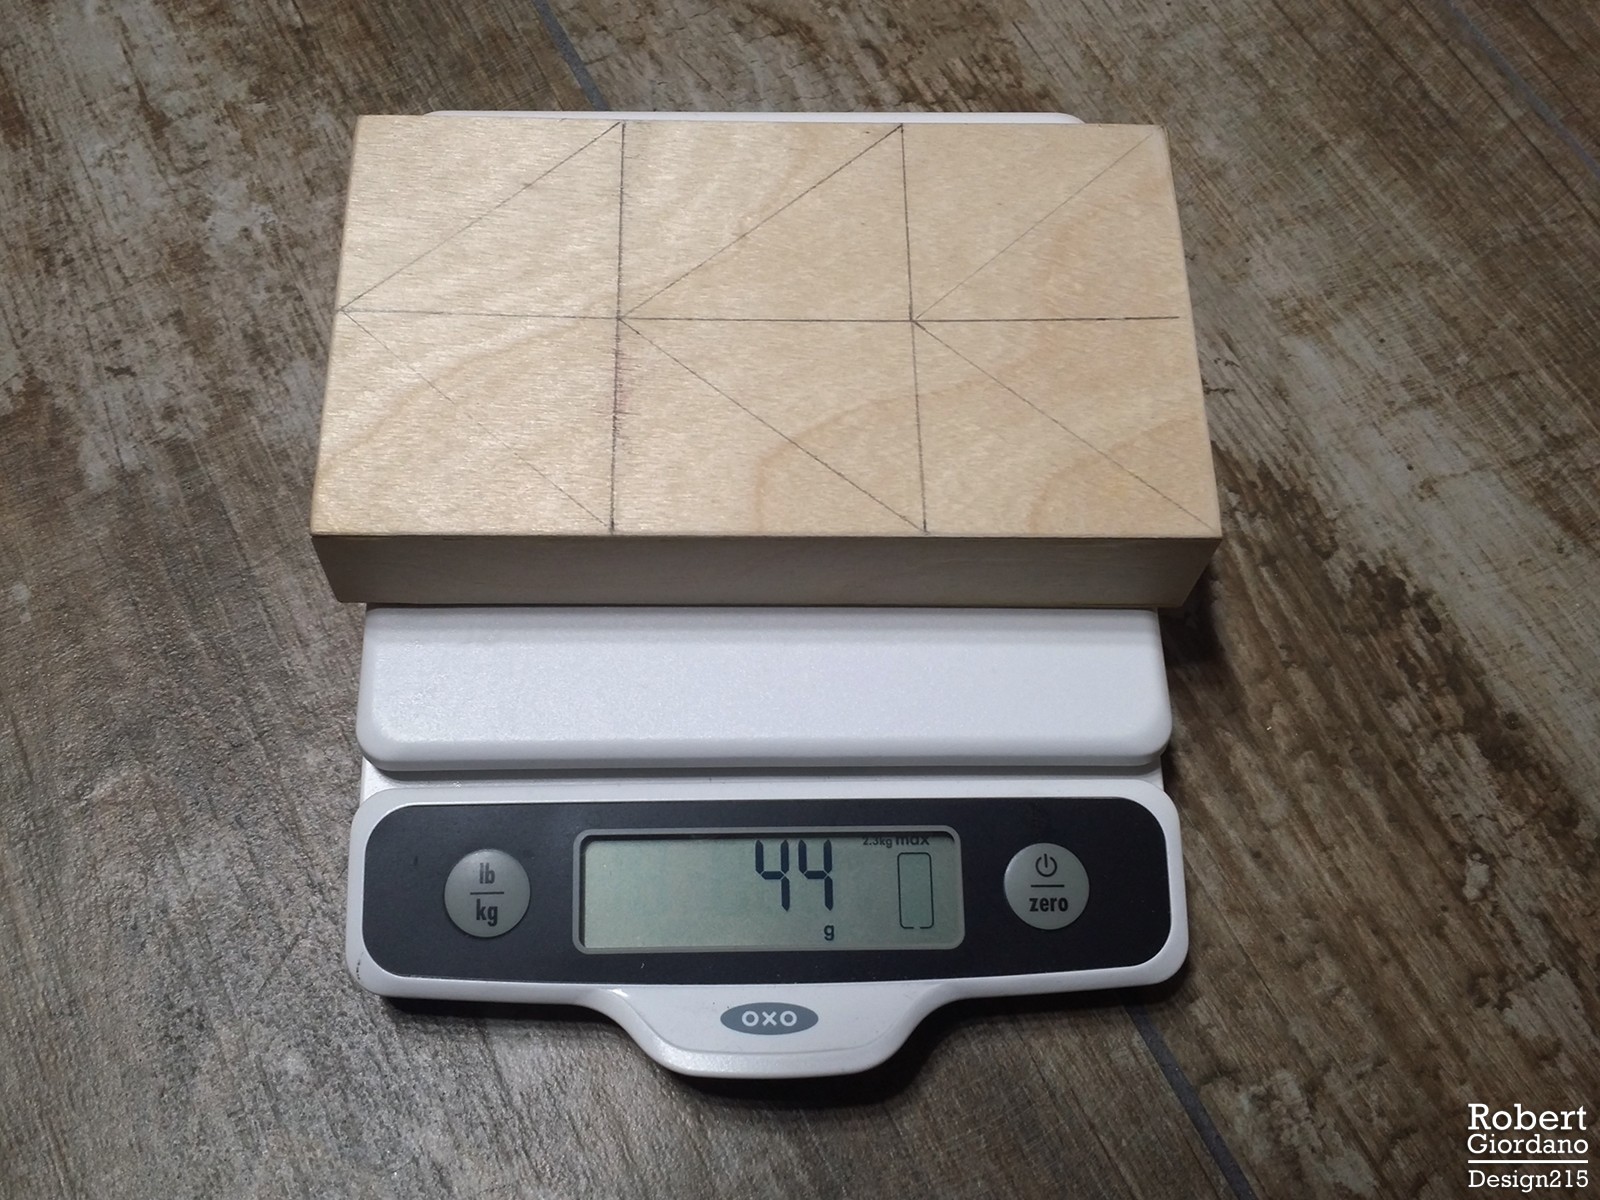 torsion box weighs 44g